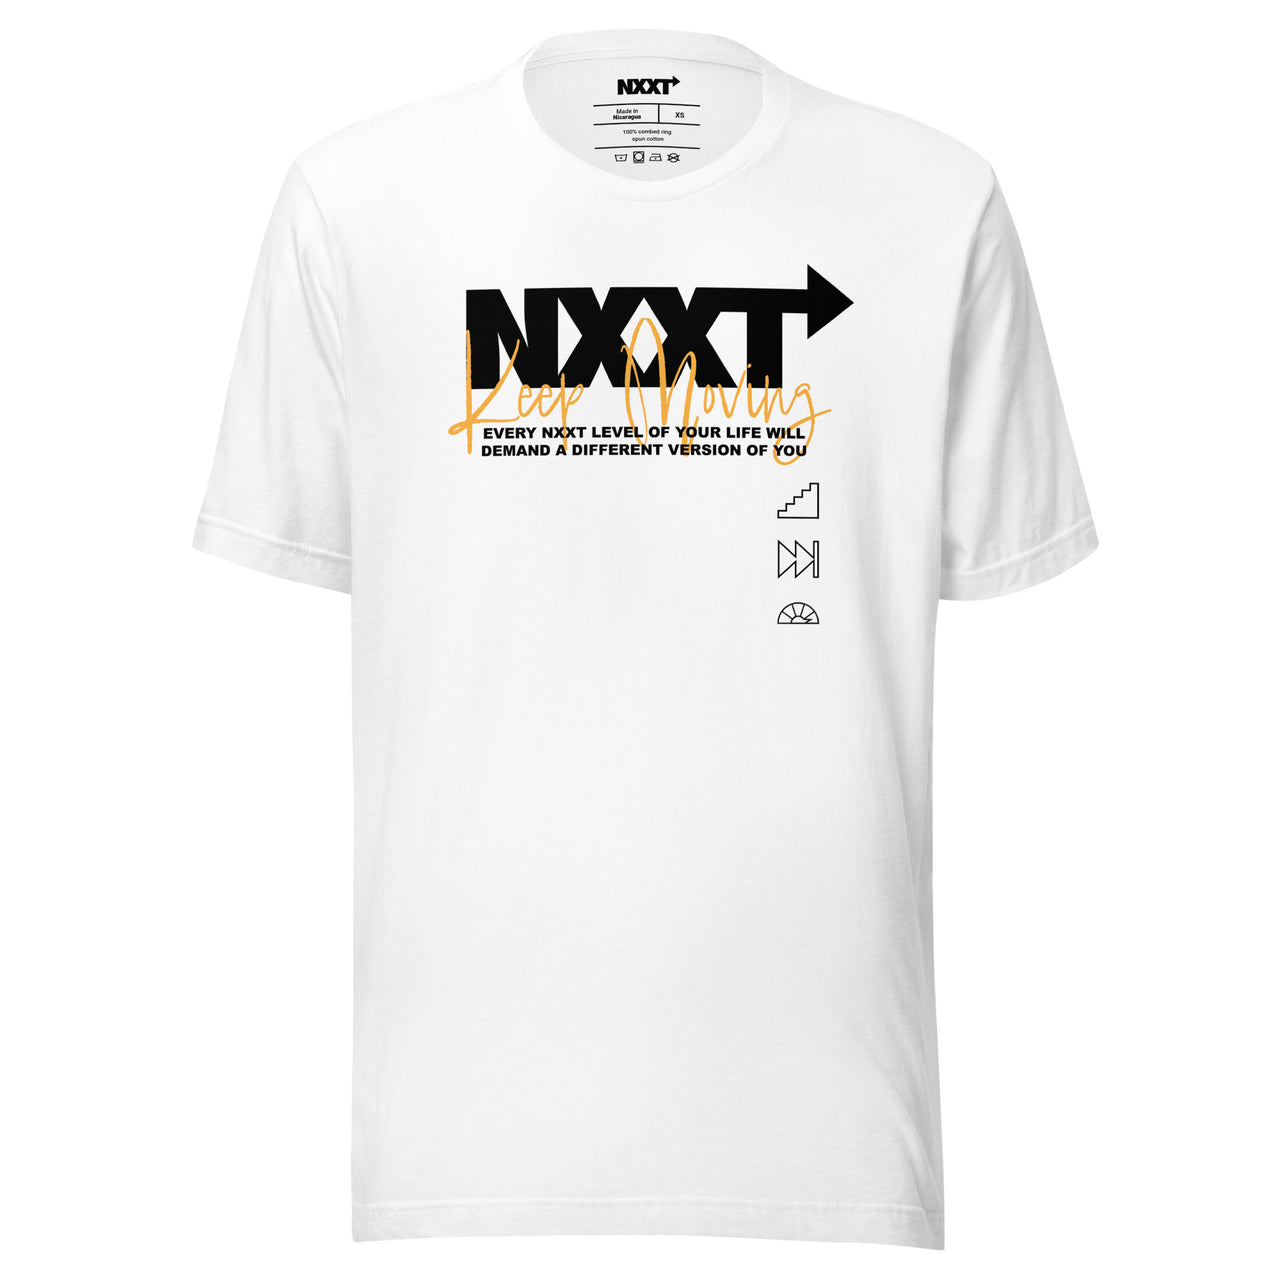 NXXT -Keep Moving- T-Shirt - Shady Lion Coffee Co.